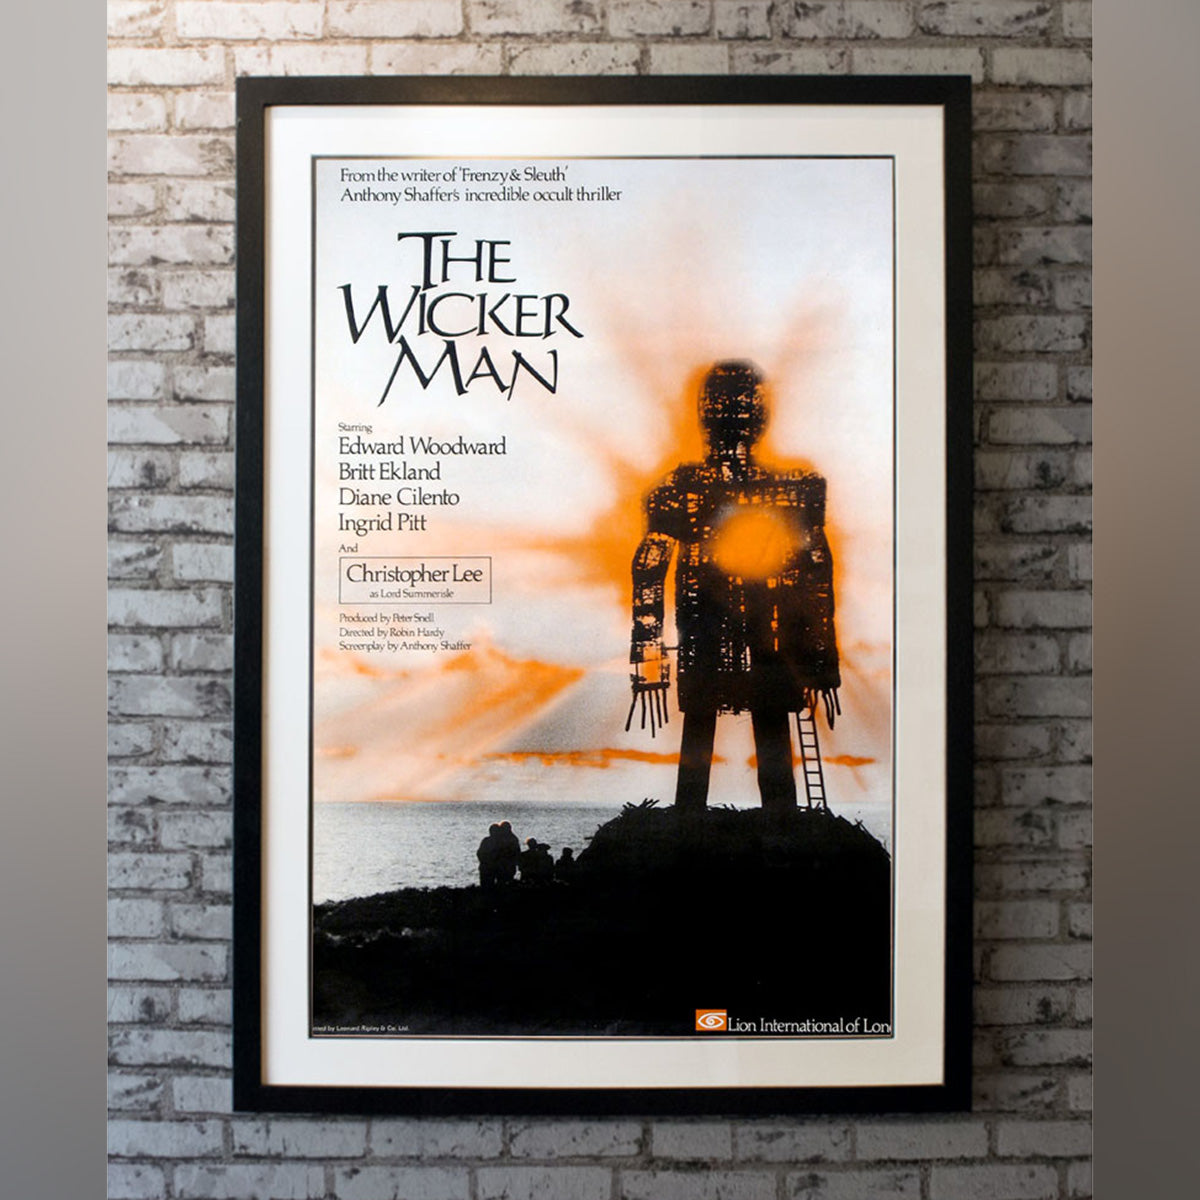 Original Movie Poster of Wicker Man, The (1973)